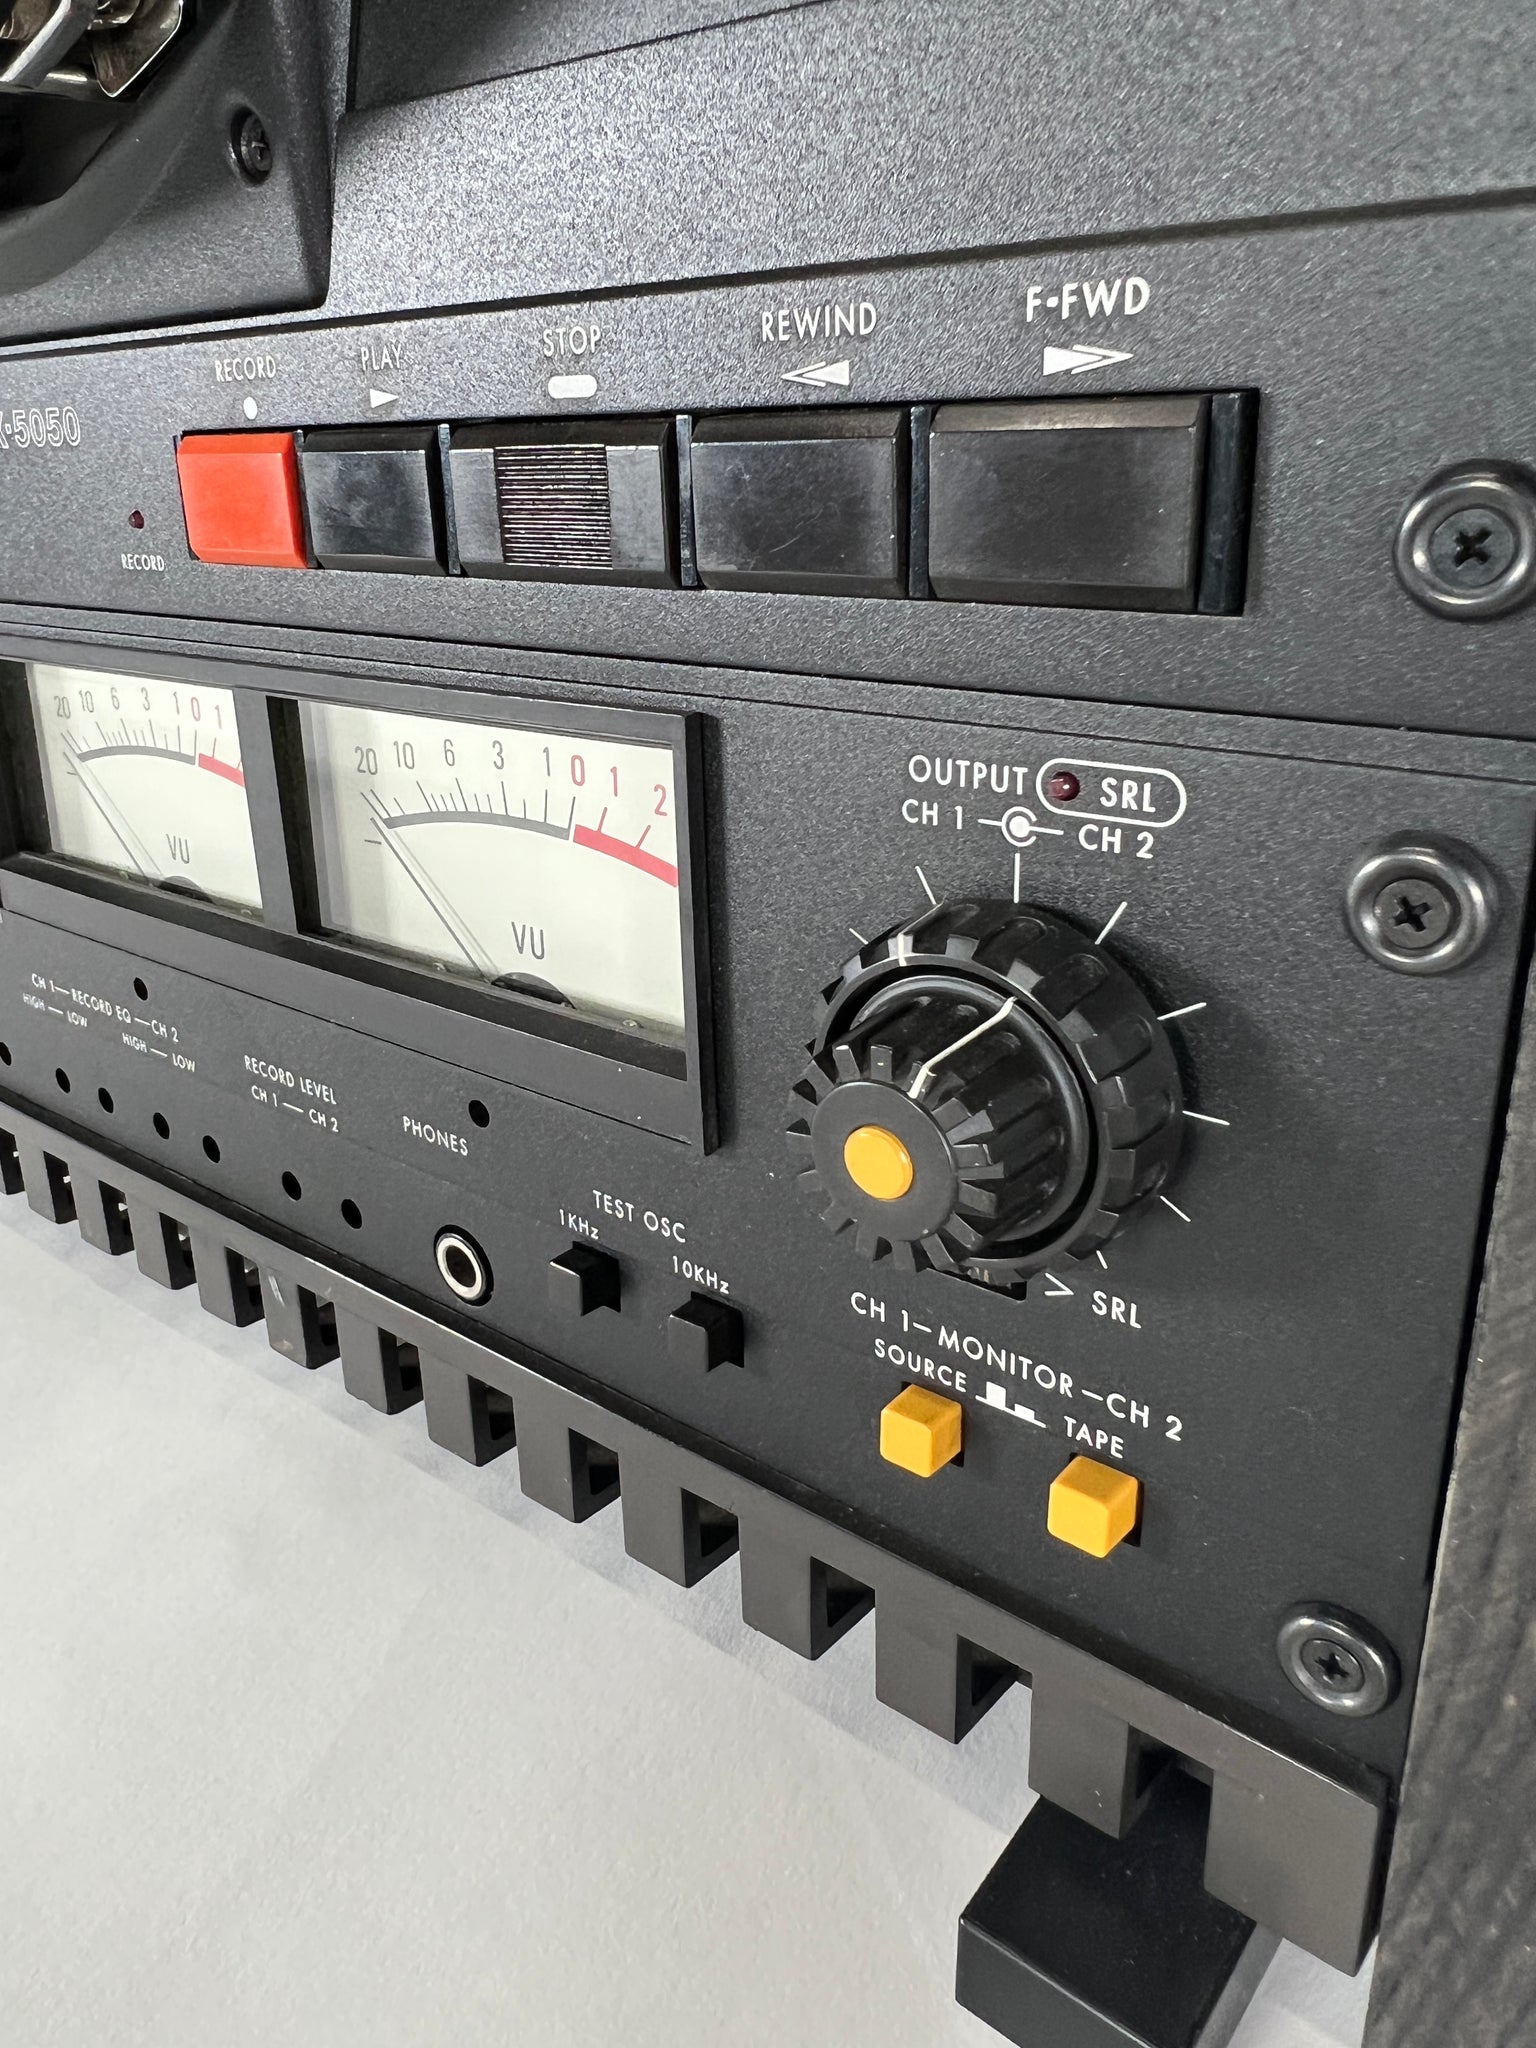 Otari MX5050 B II-2 Two Track Reel-To-Reel Professional Studio Tape Recorder